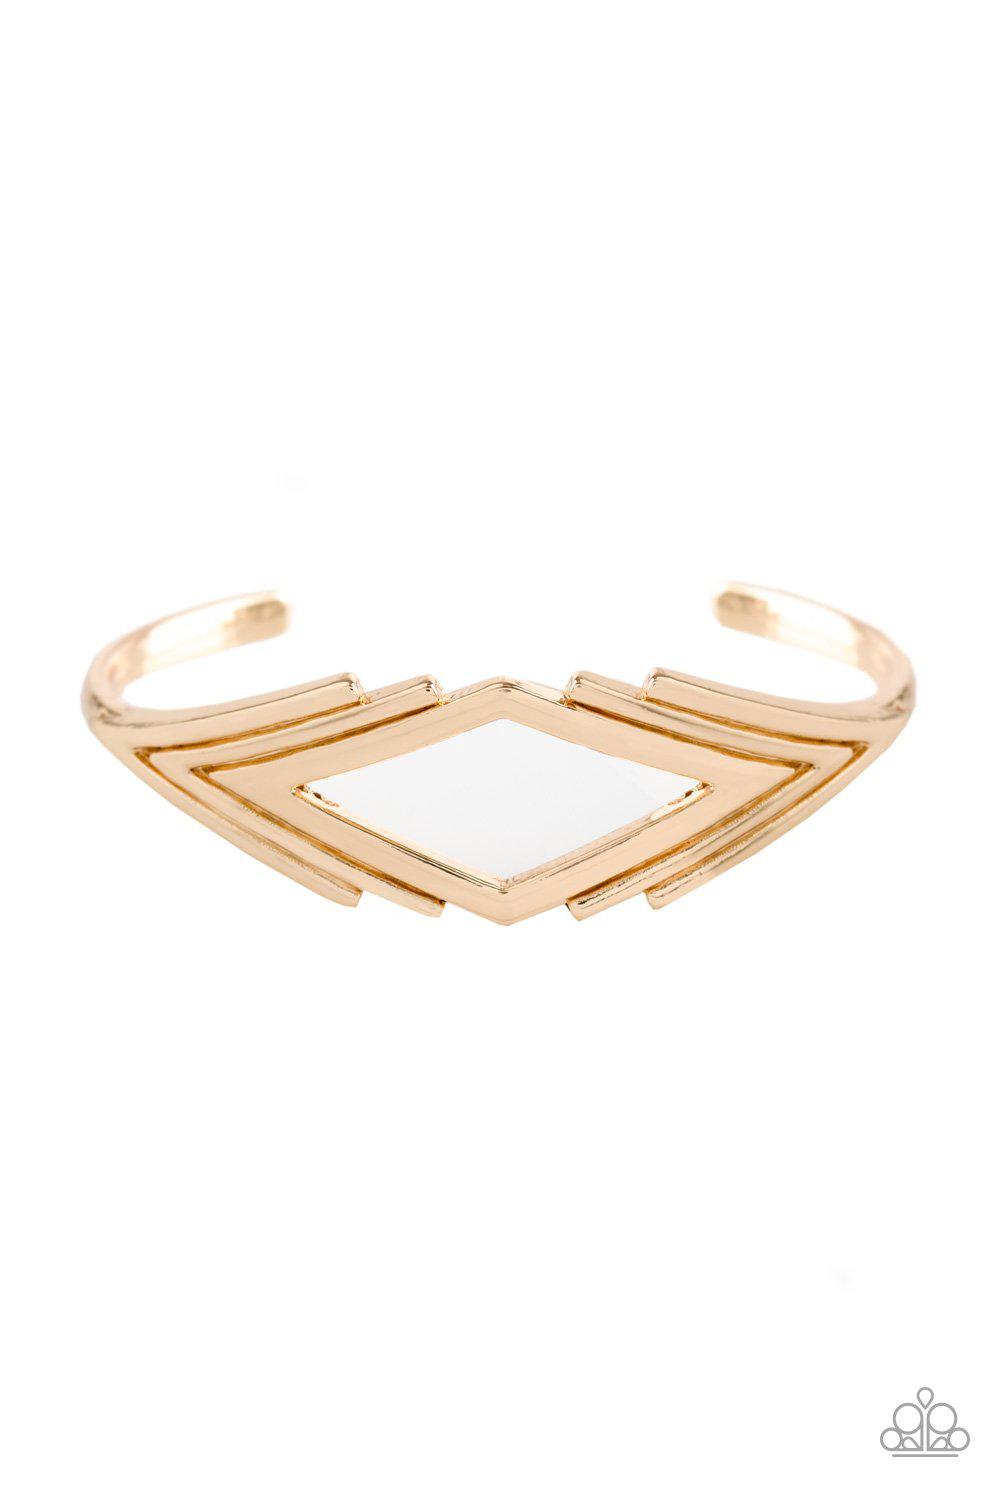 In Total De-NILE Gold Cuff Bracelet - Paparazzi Accessories-CarasShop.com - $5 Jewelry by Cara Jewels